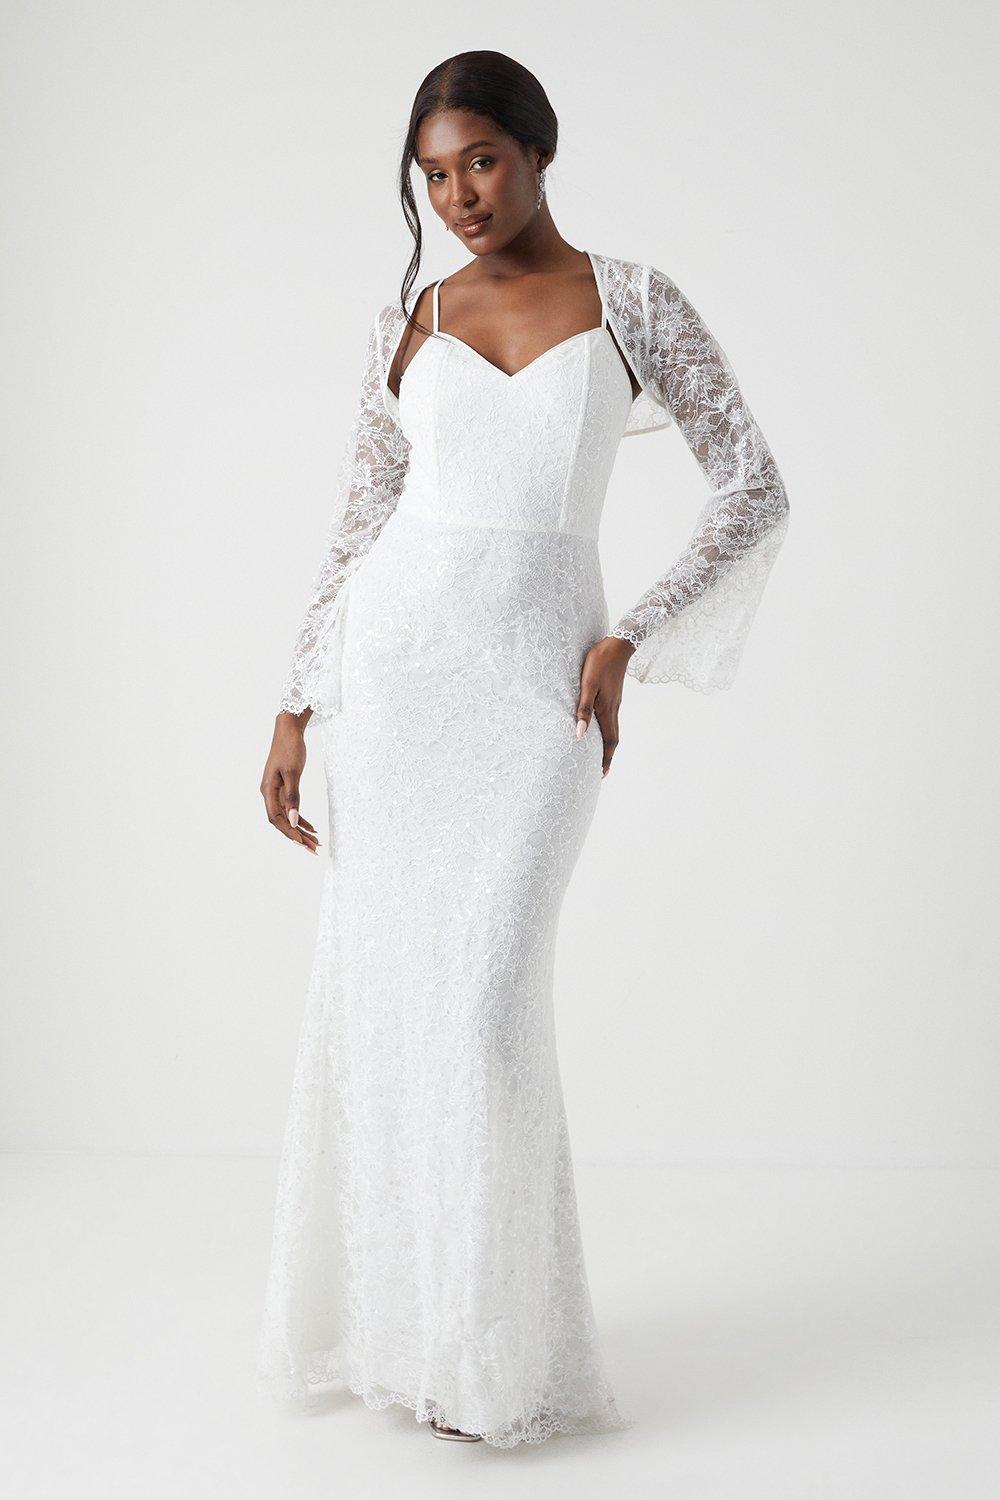 Sequin Lace Wedding Dress With Bolero - Ivory